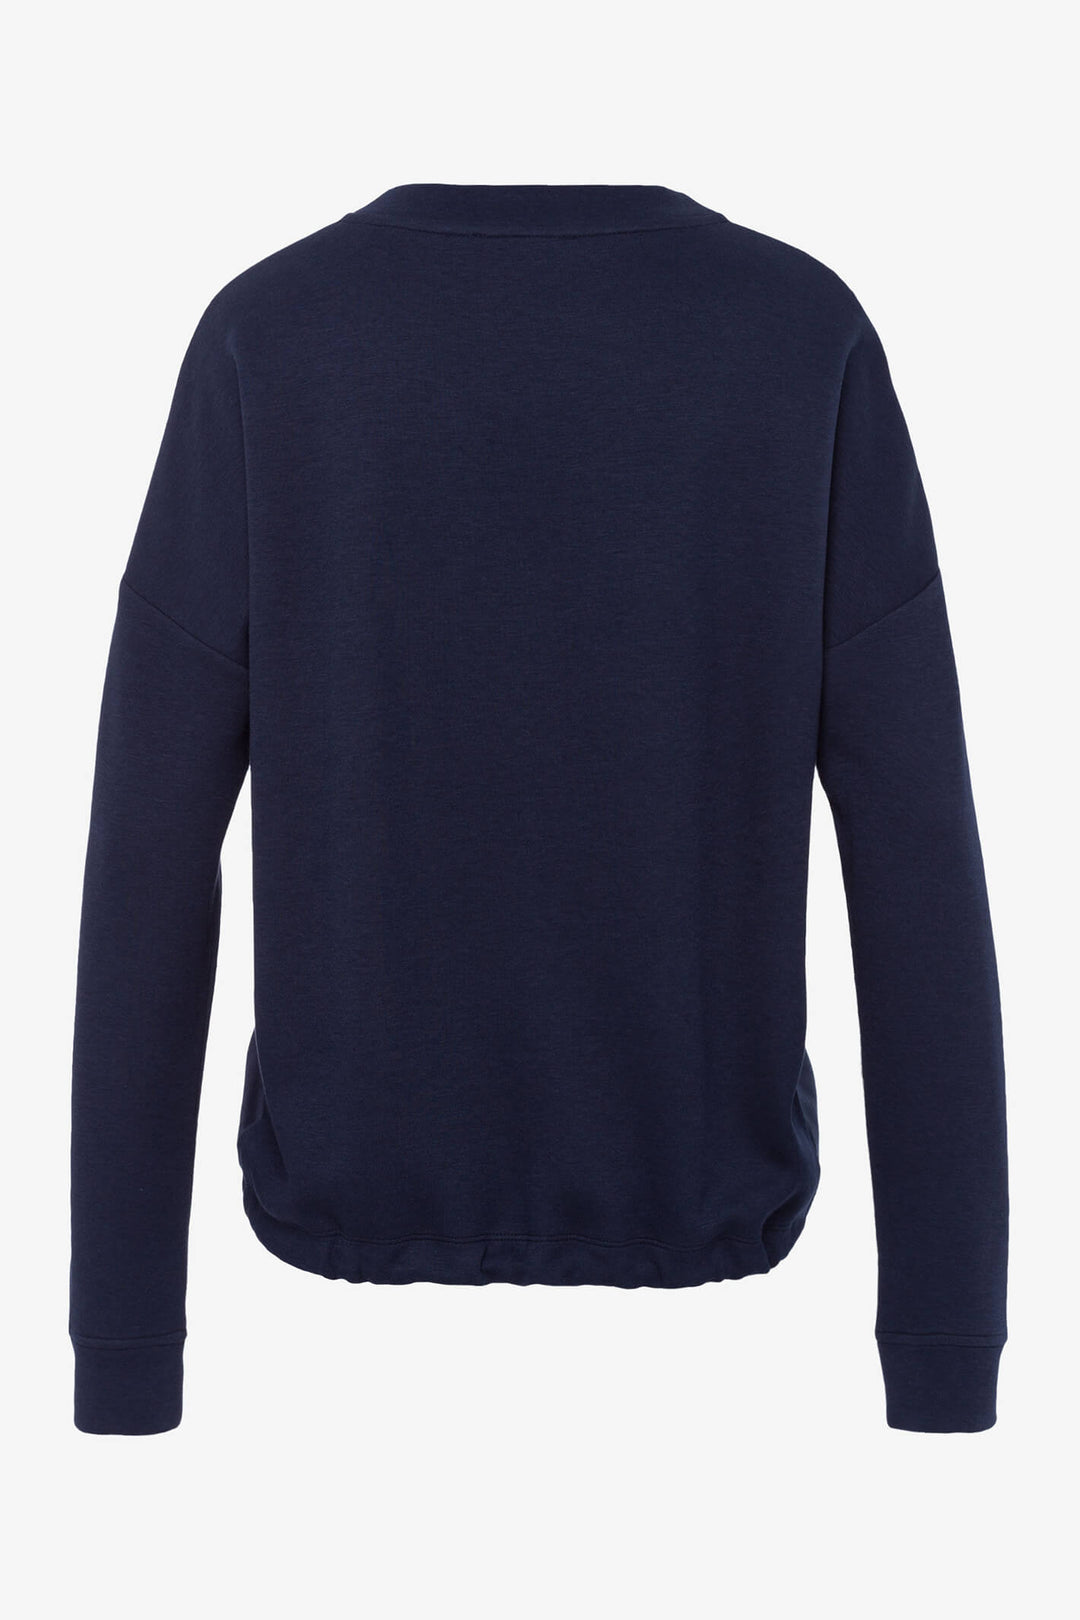 Brax Bo 35-6824 20 Marine Blue Sweatshirt - Shirley Allum Boutique